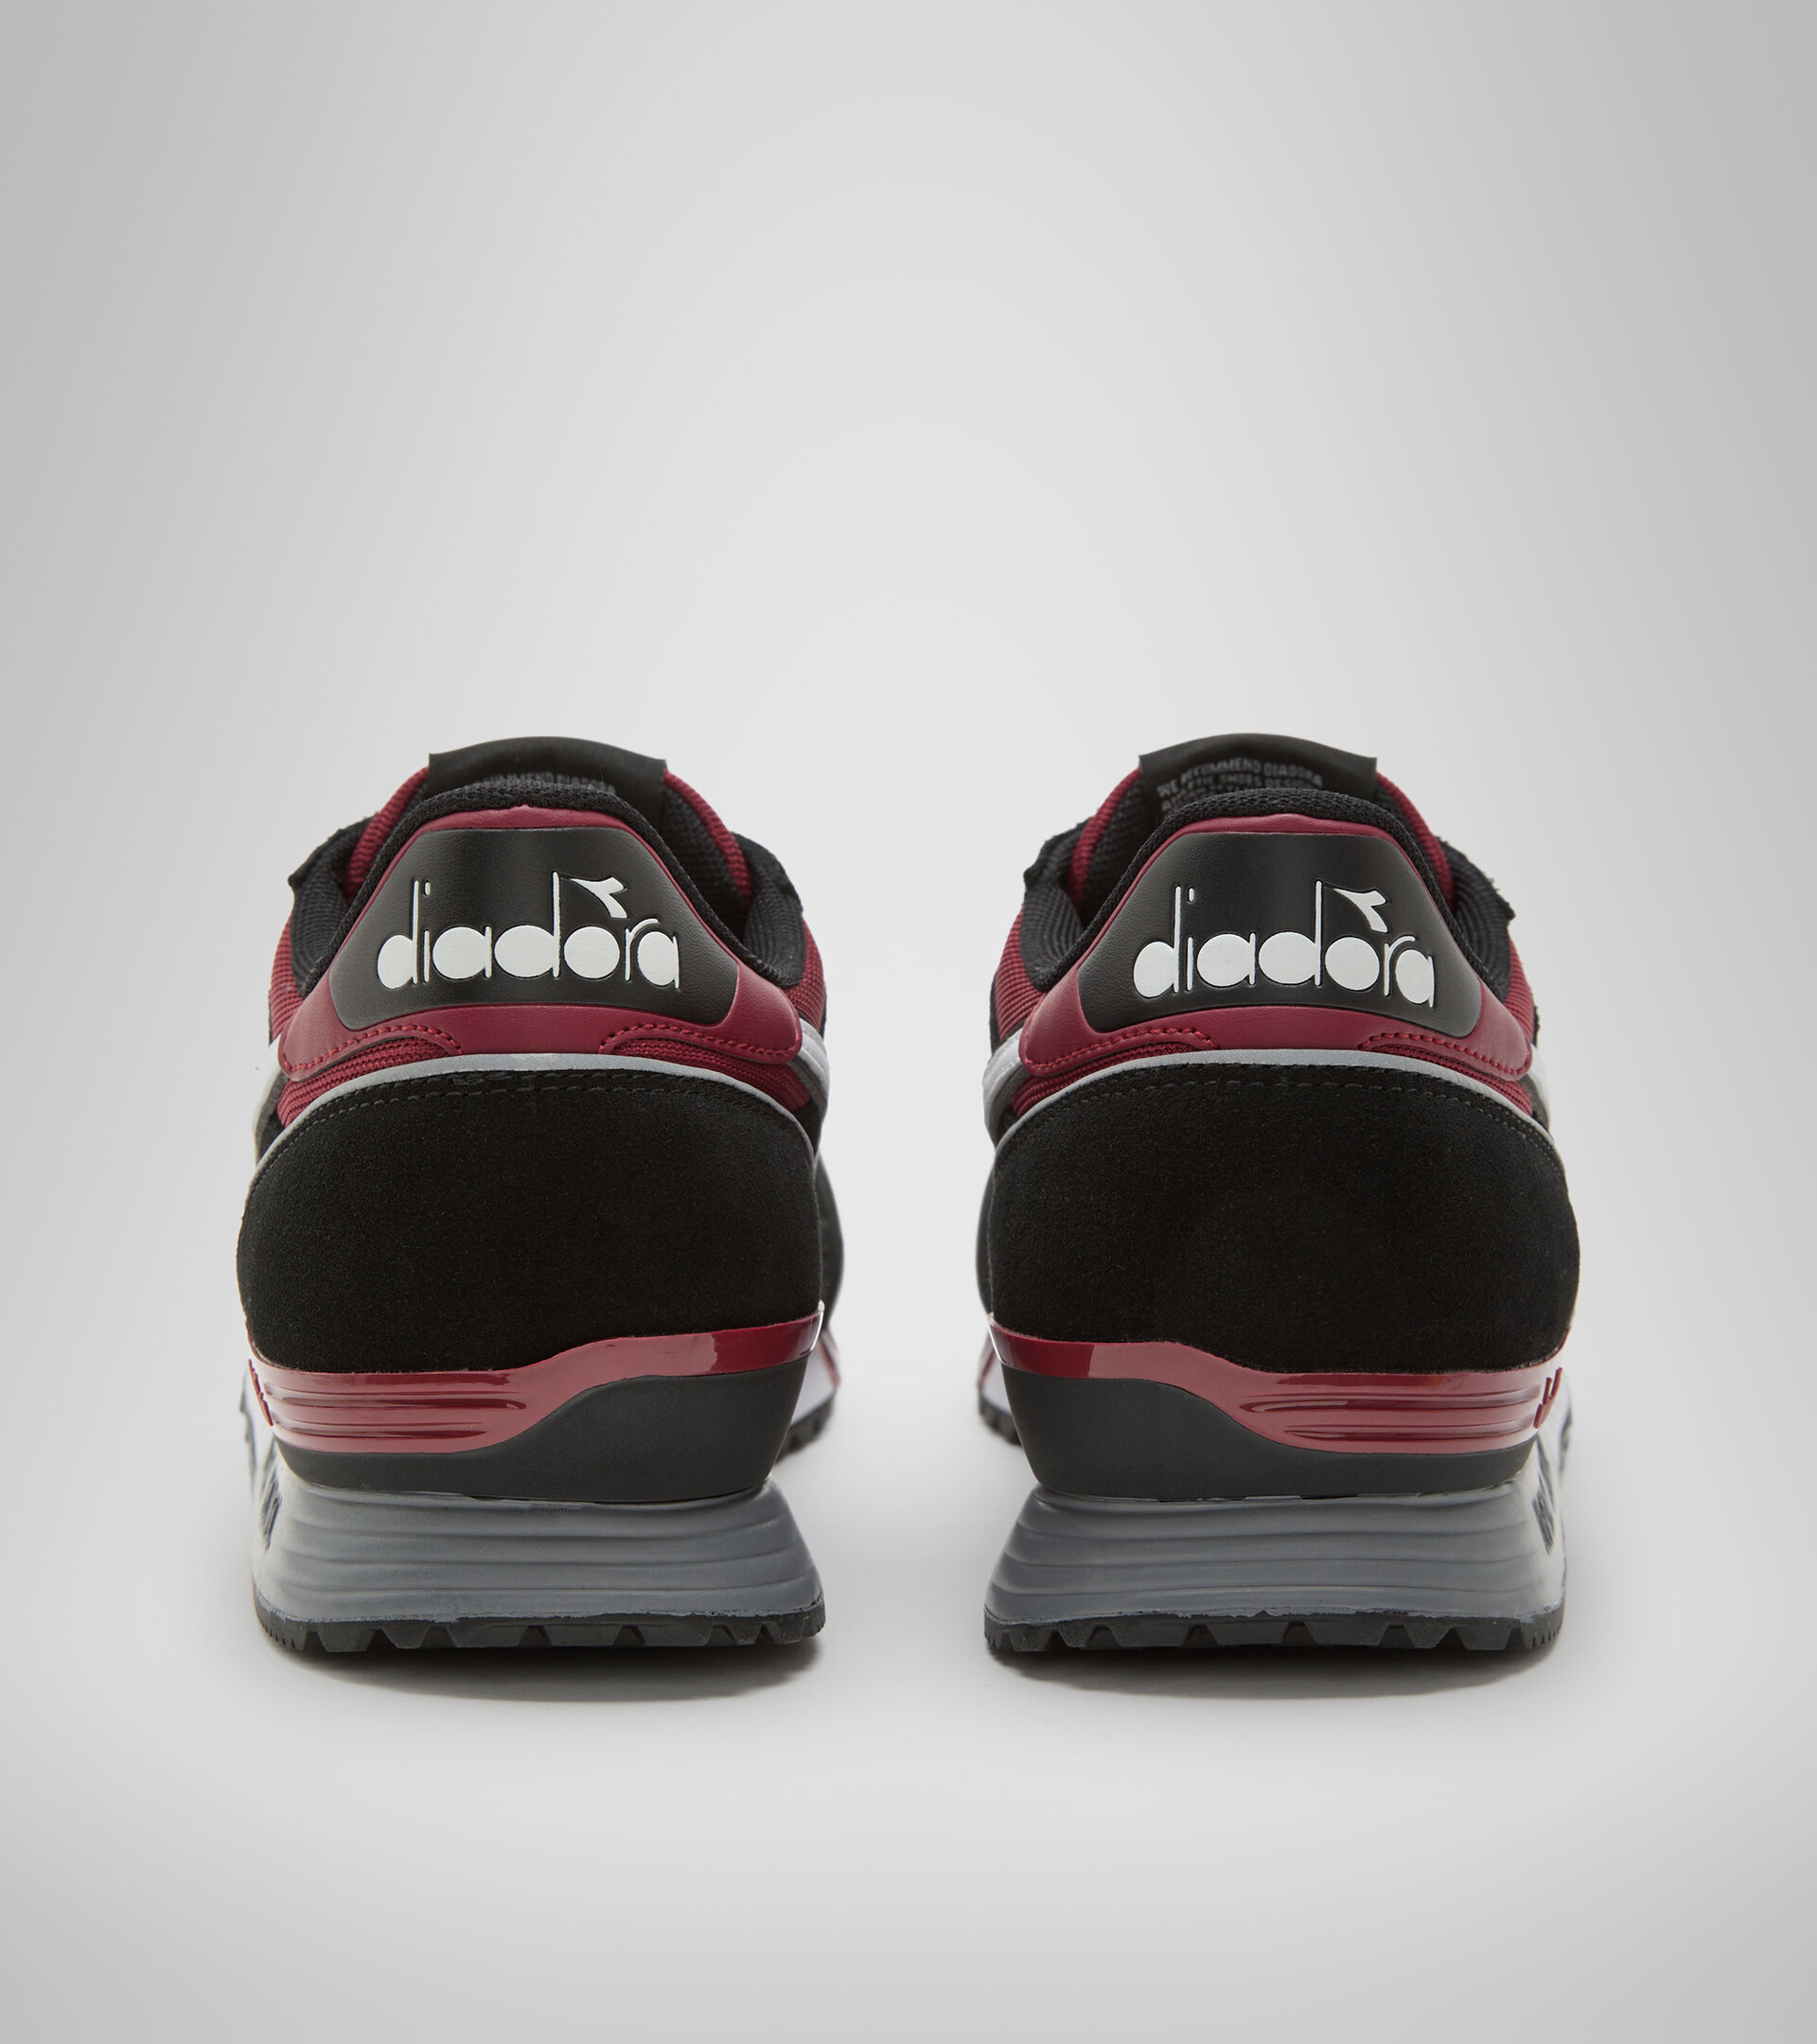 Chaussures de sport - Homme TITAN RHUBARBE/NOIR - Diadora